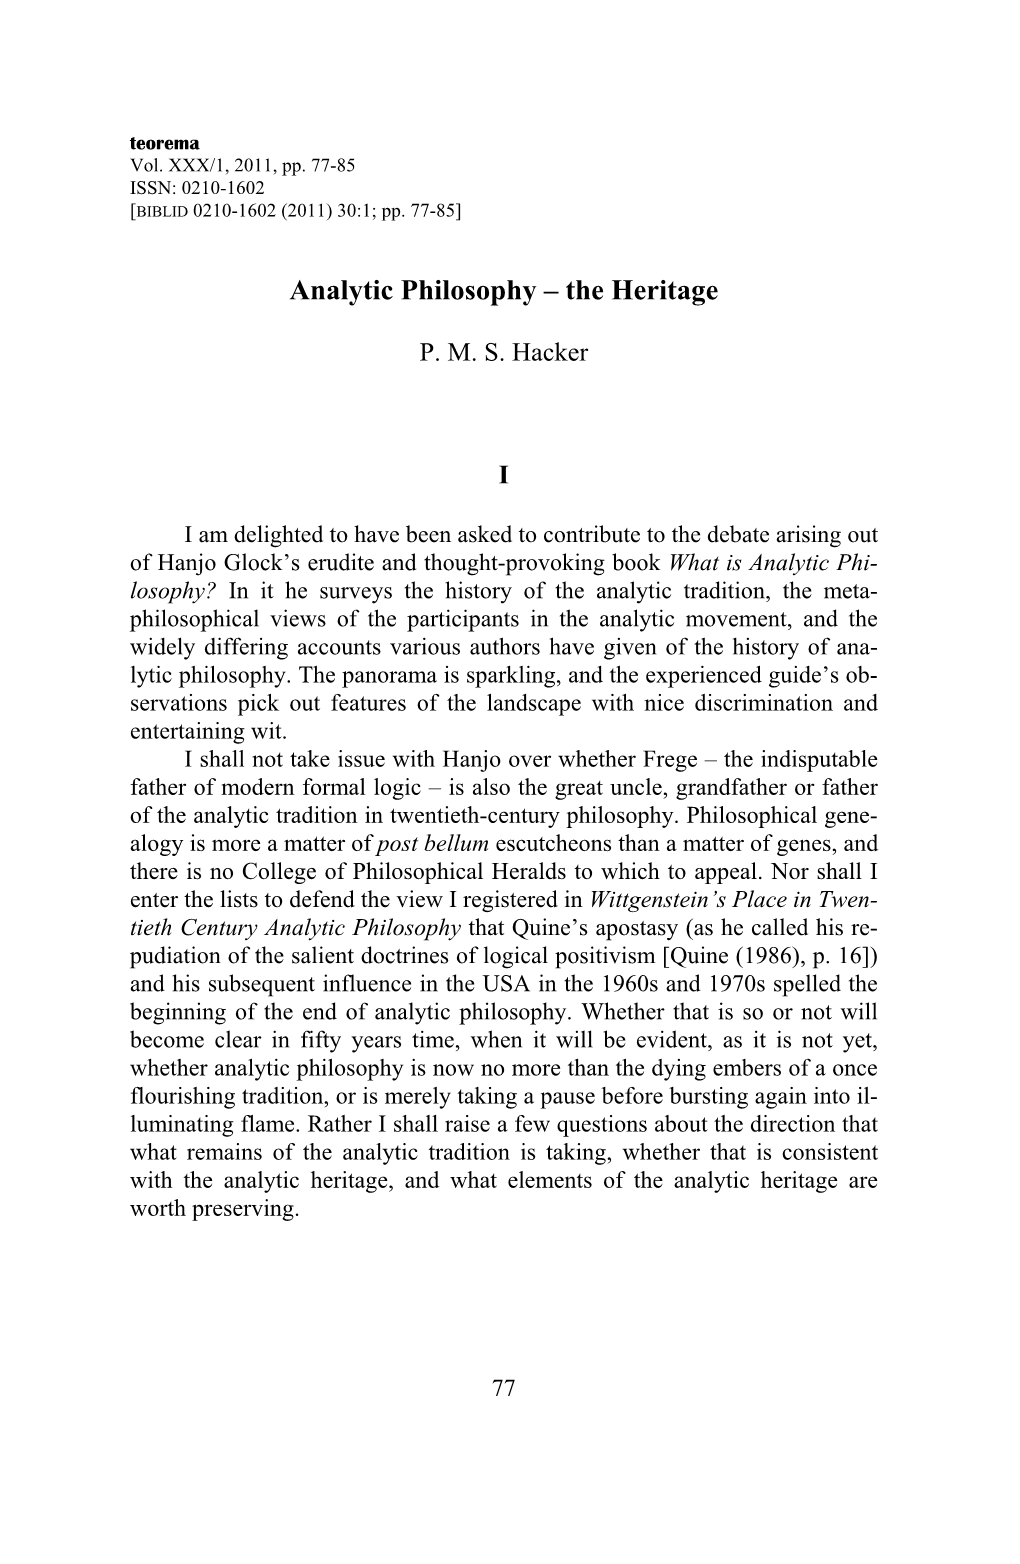 Analytic Philosophy – the Heritage